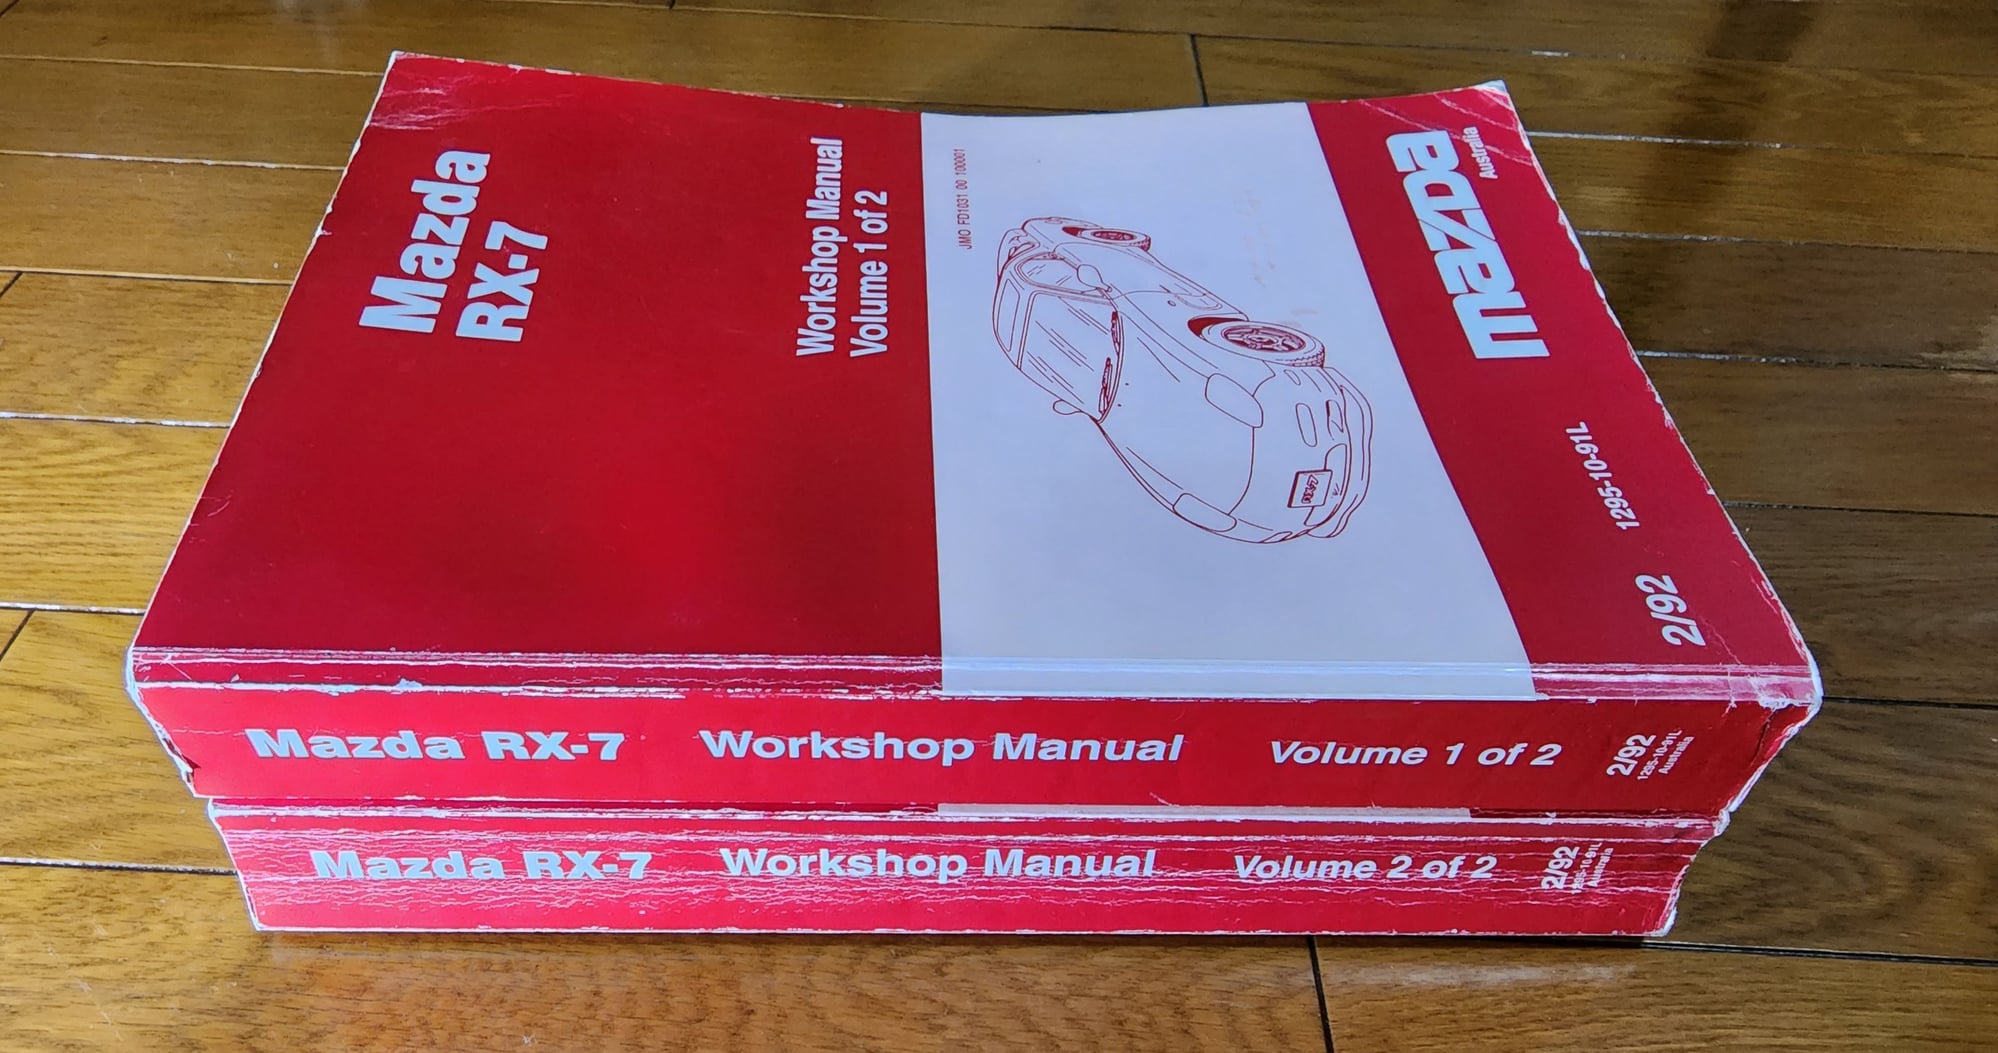 Accessories - Super Rare Australian RHD English Workshop Manuals - Used - 1992 to 1997 Mazda RX-7 - Okinawa City, Japan